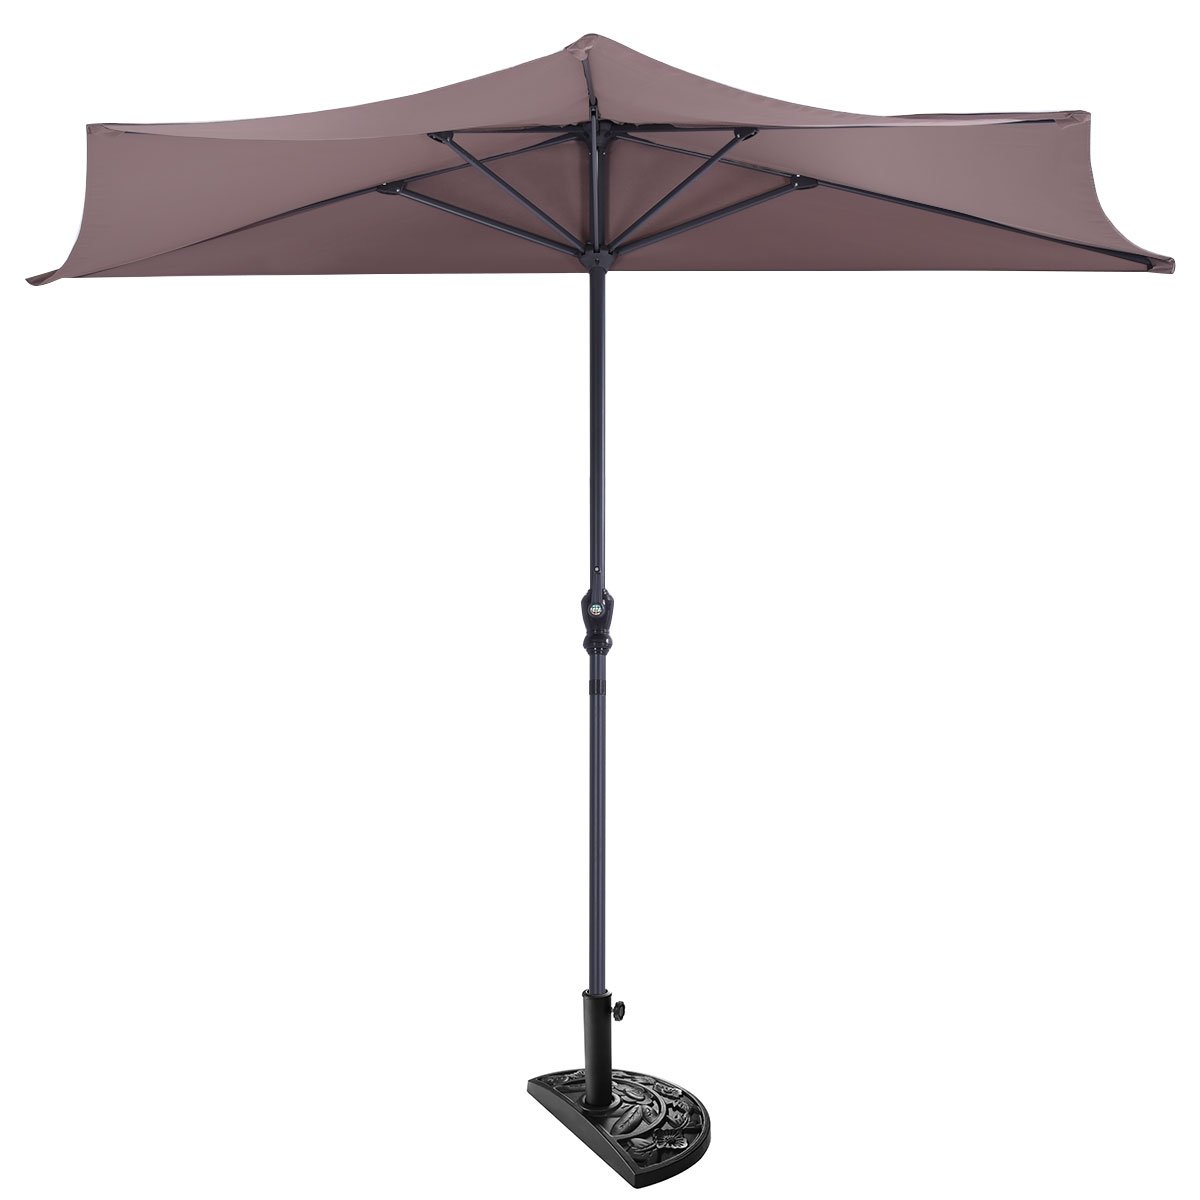 9' Half Round Patio Umbrella Sunshade without Weight Base, Tan